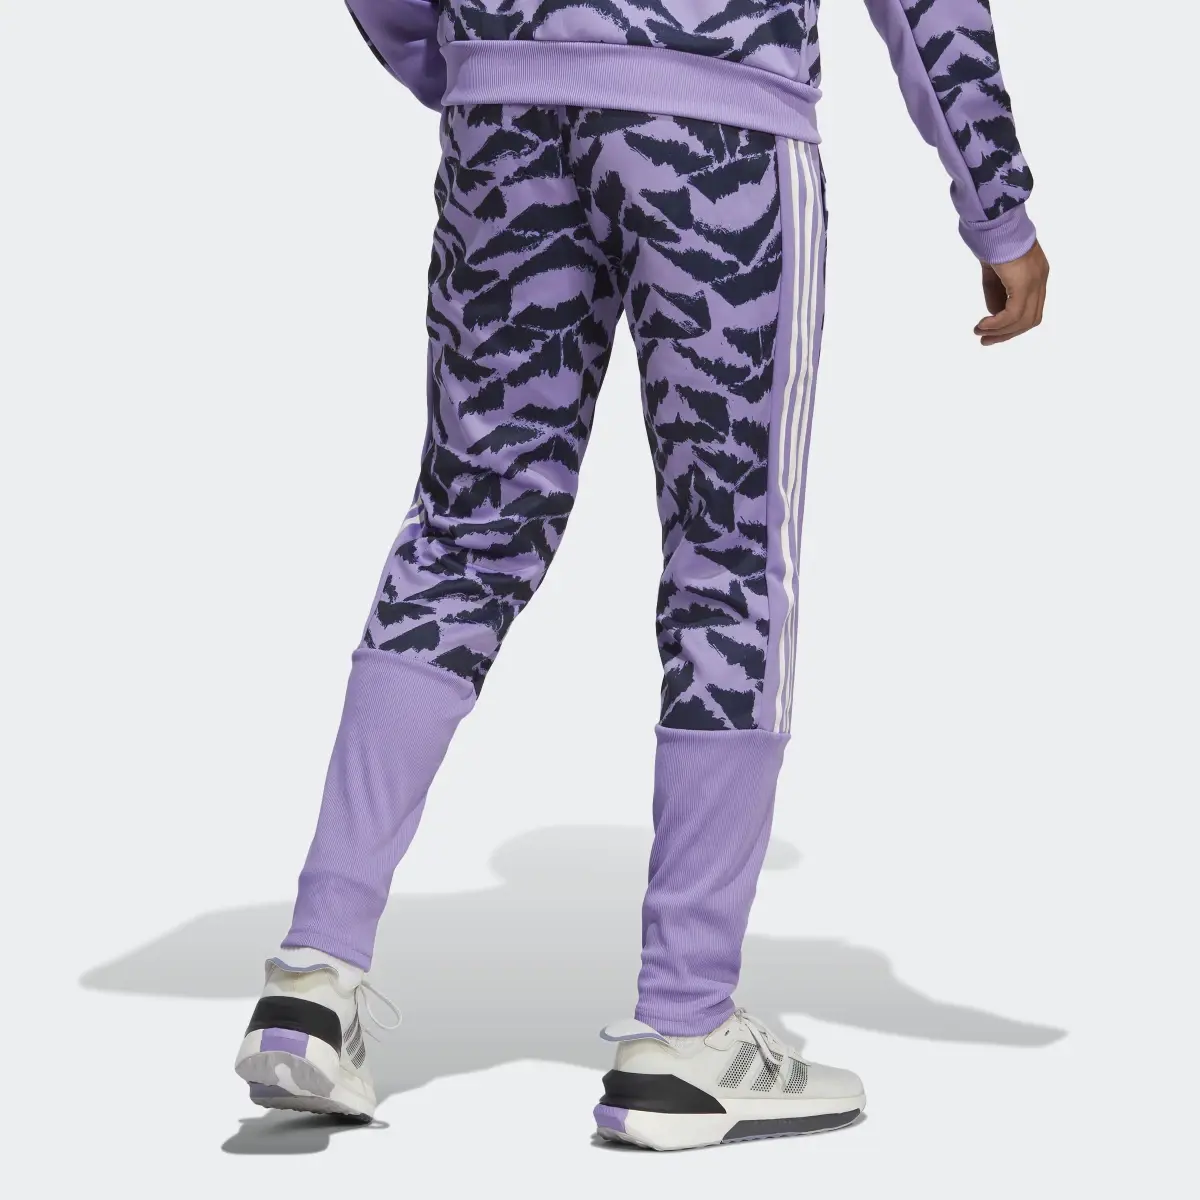 Adidas Tiro Suit-Up Lifestyle Track Pants. 2